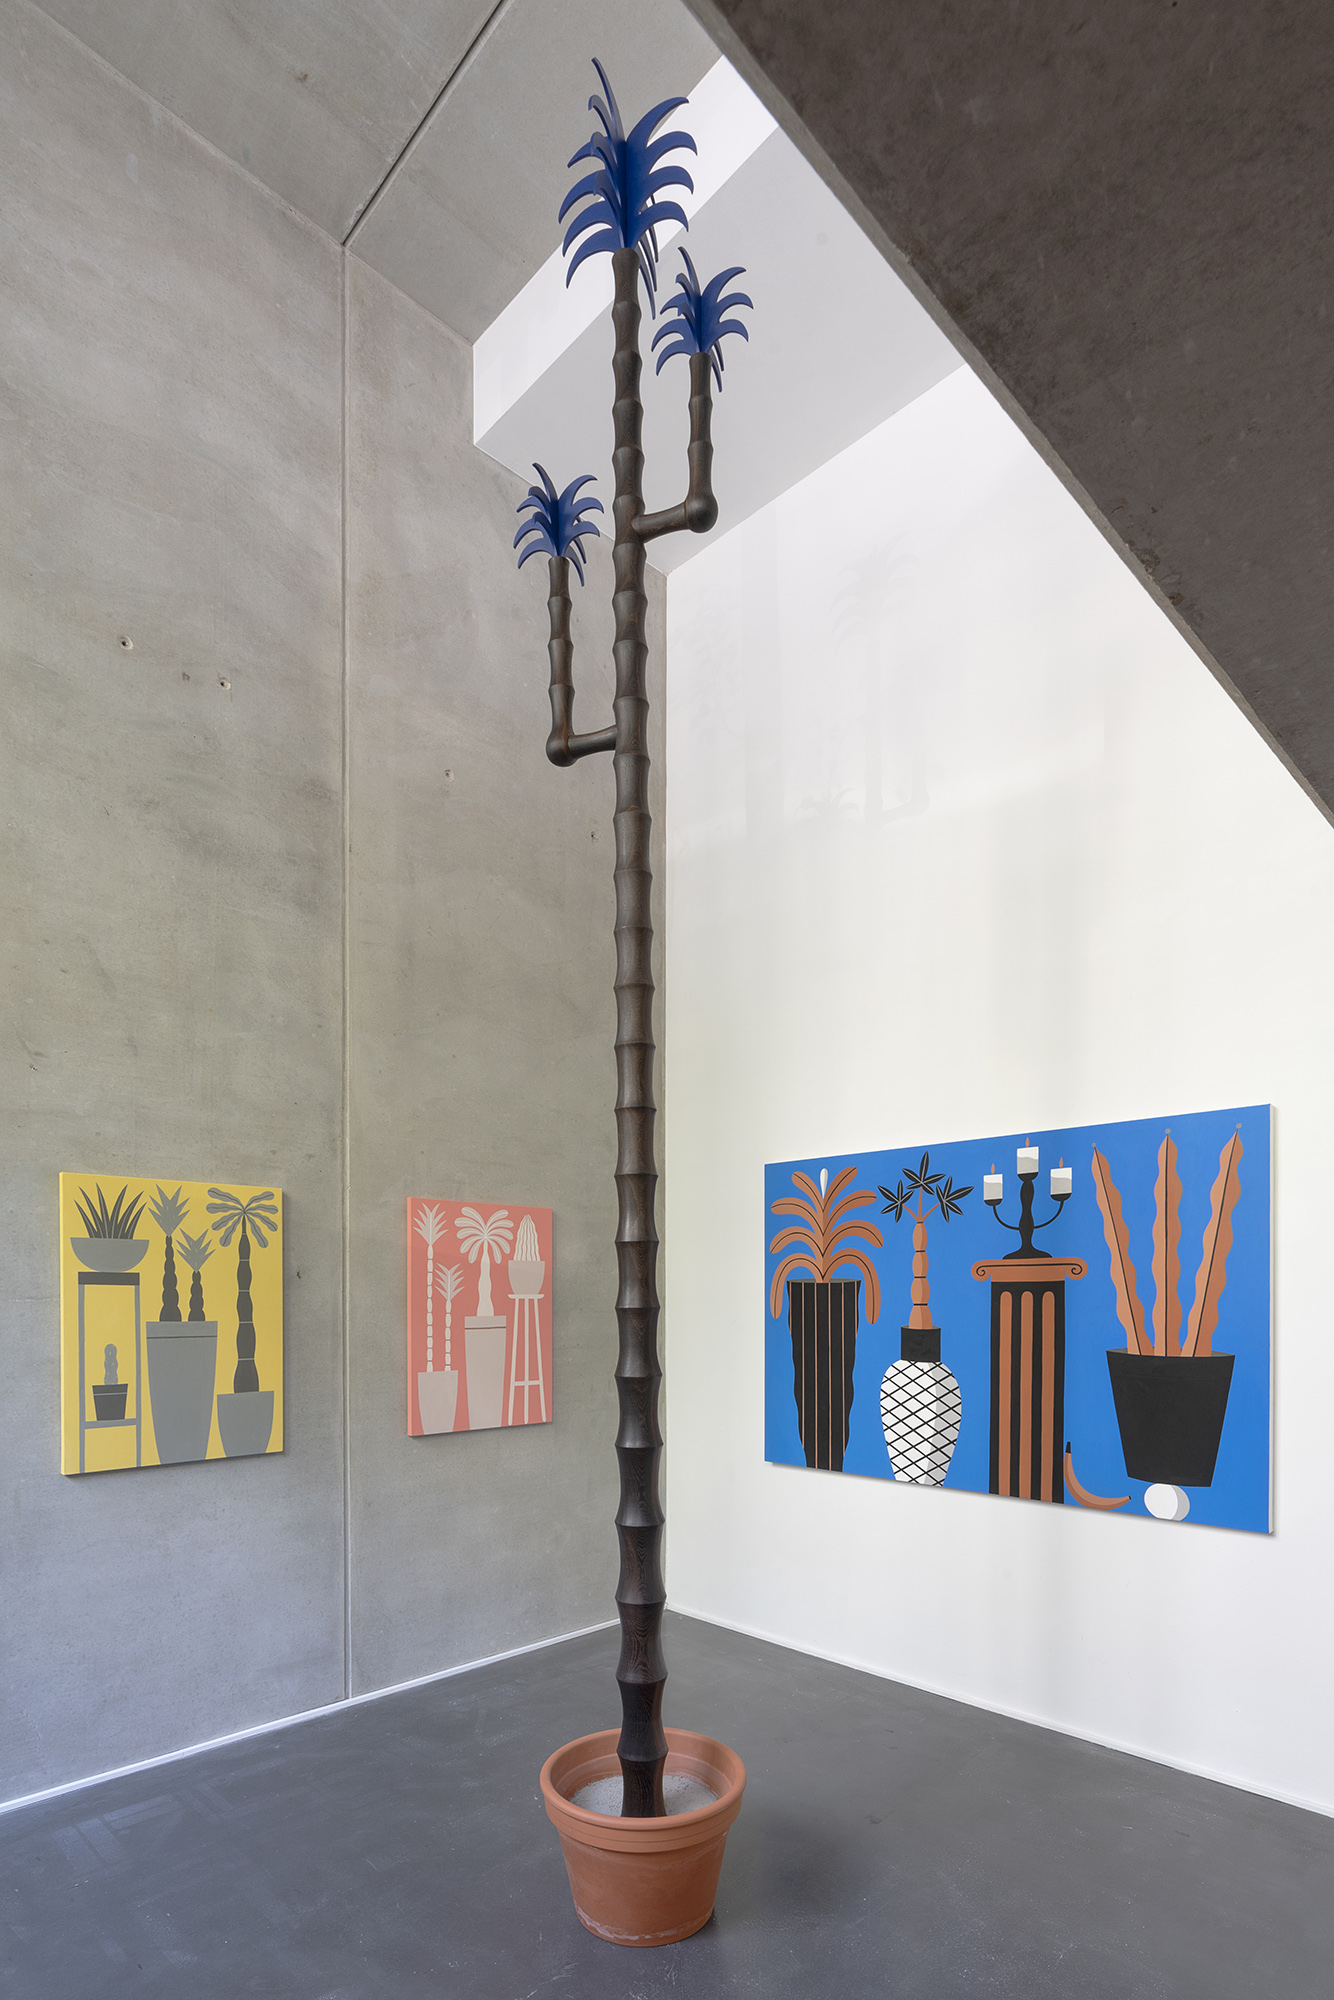 Agostino Iacurci - BC Gallery, Berlin, 2019

